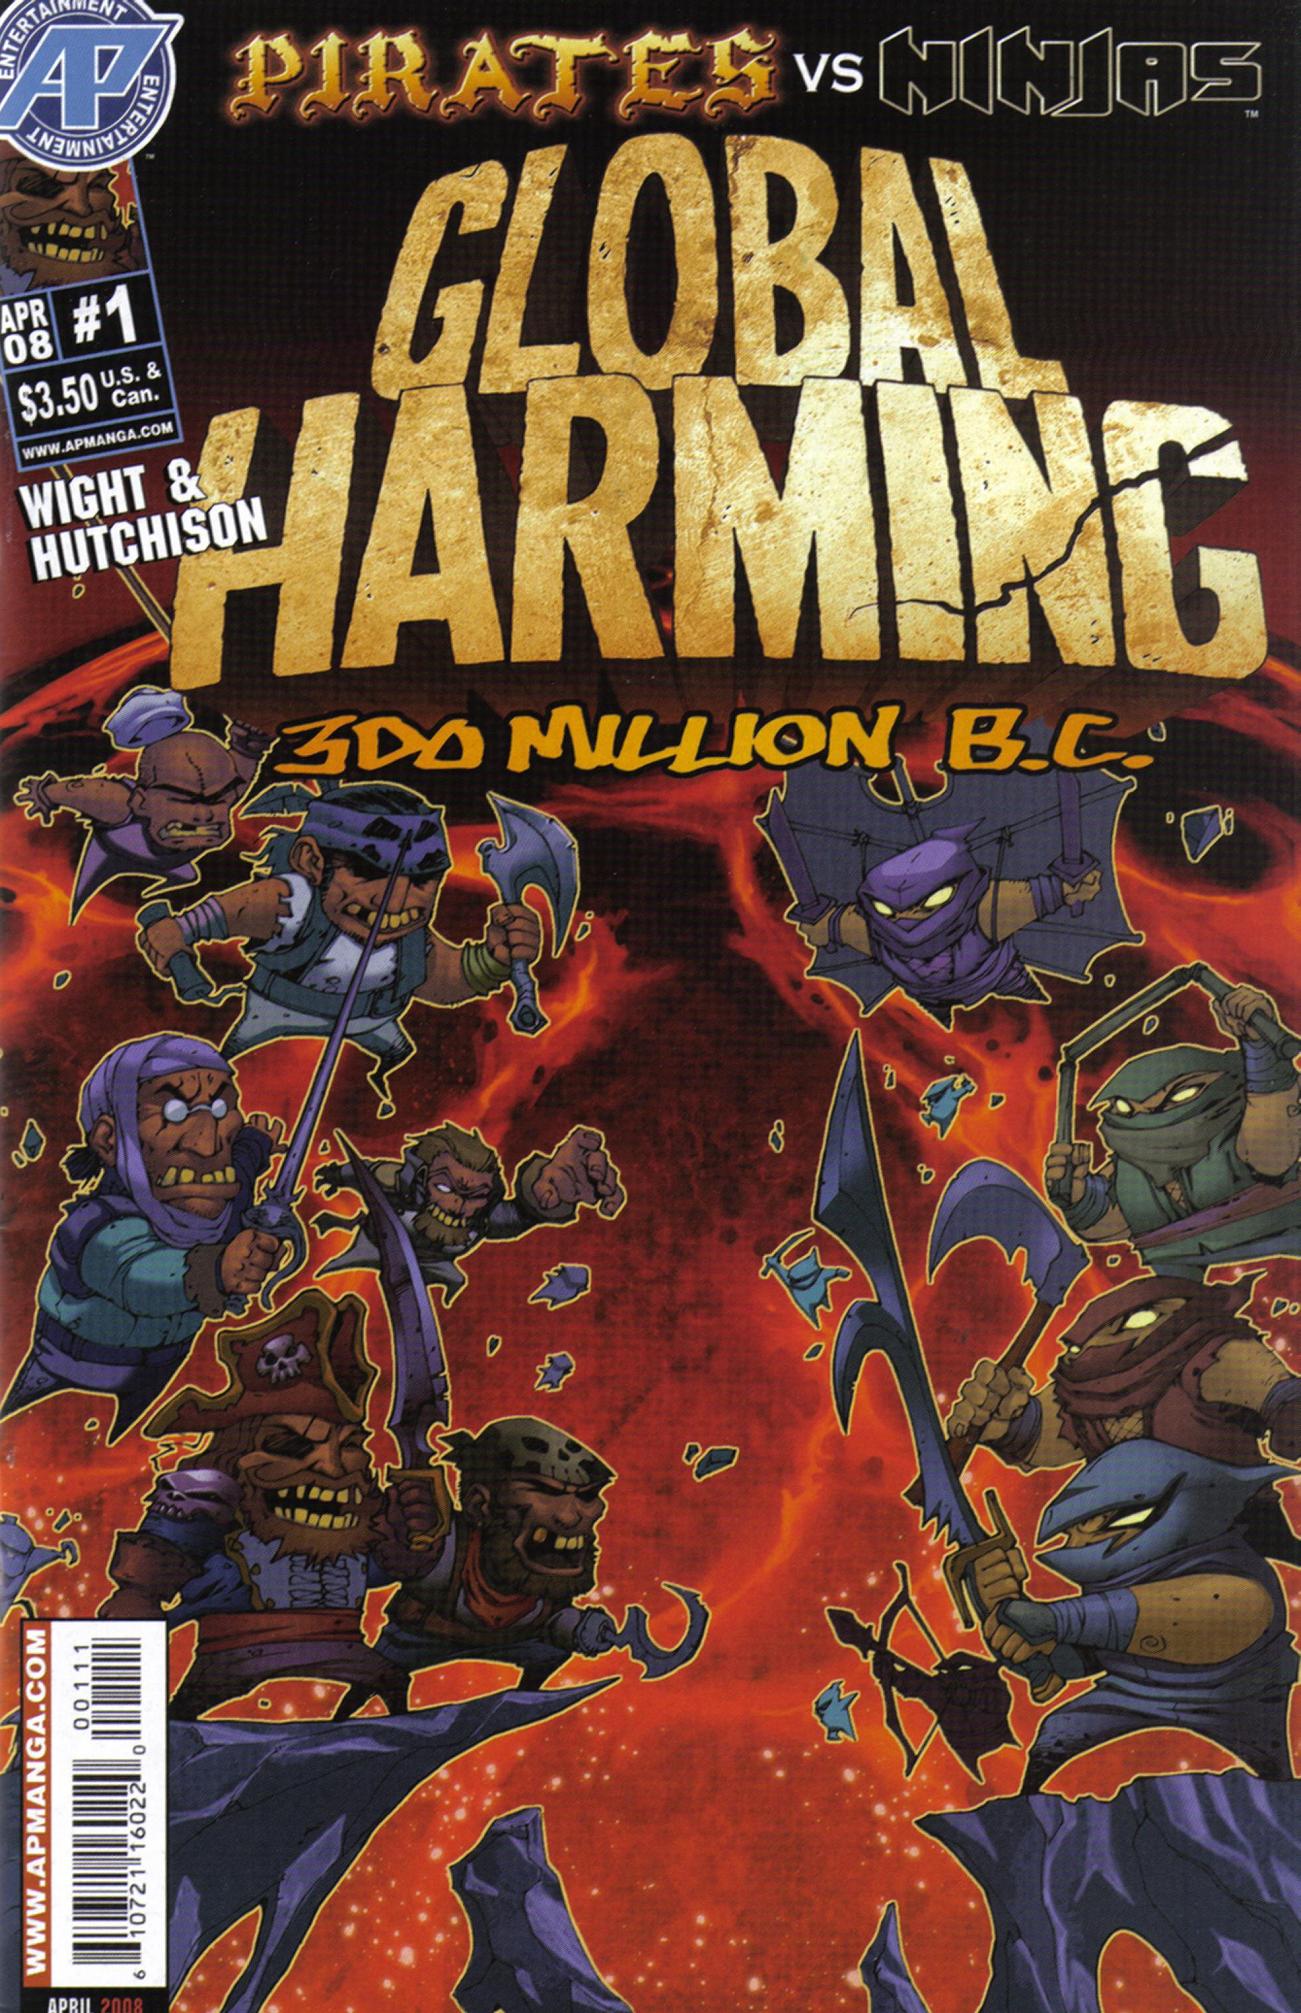 Read online Pirates vs. Ninjas: Global Harming comic -  Issue # Full - 1